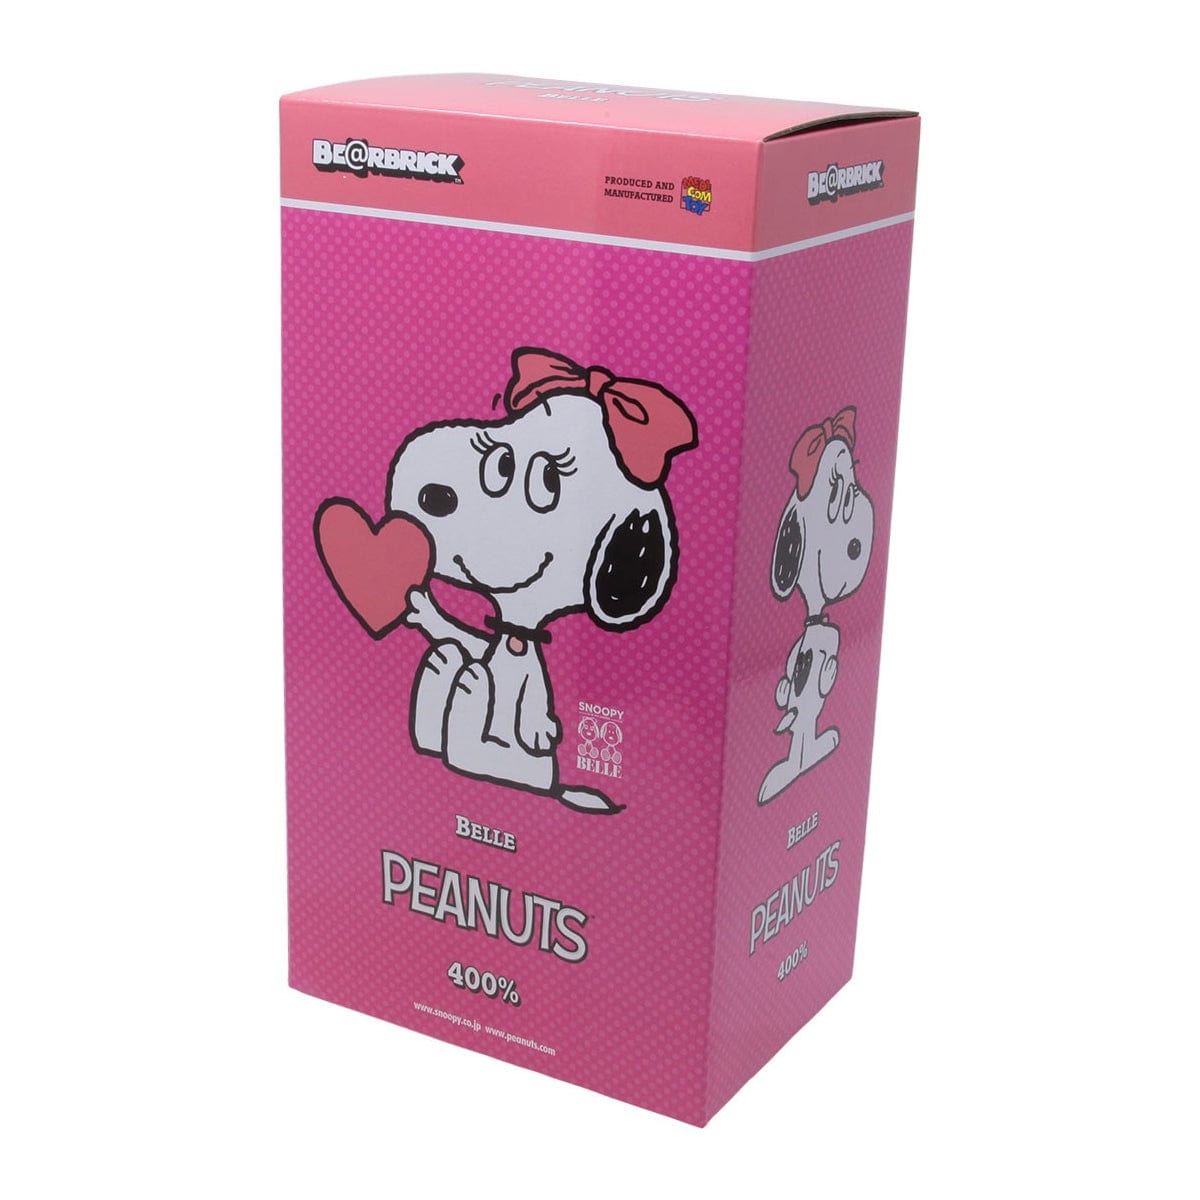 Peanuts Belle 400% Bearbrick by Medicom Toys